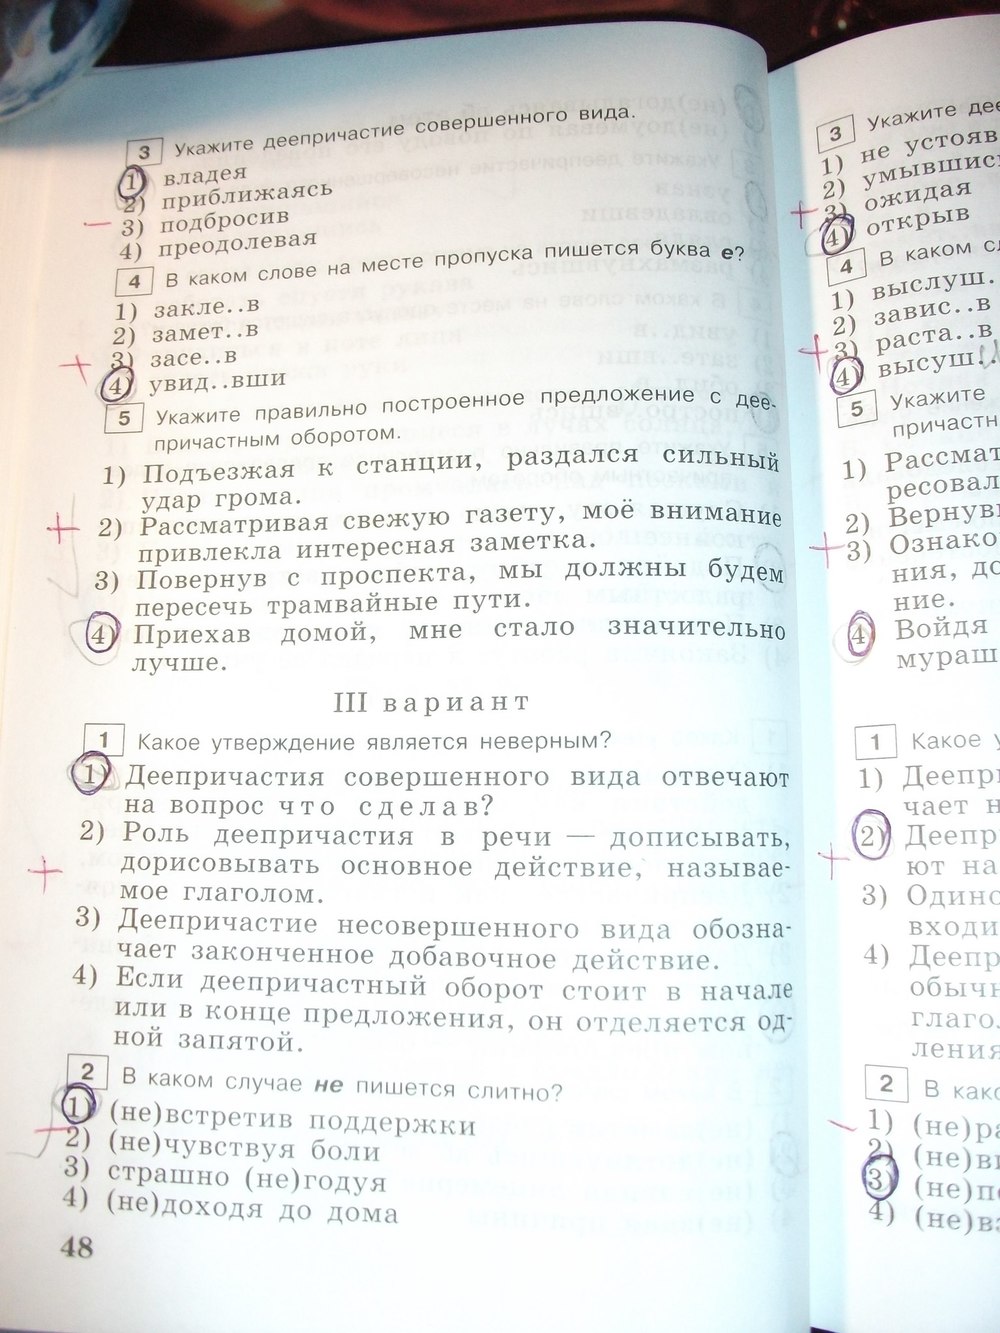 Гдз по тестовые задания по русскому языку 7 класс г а багданова